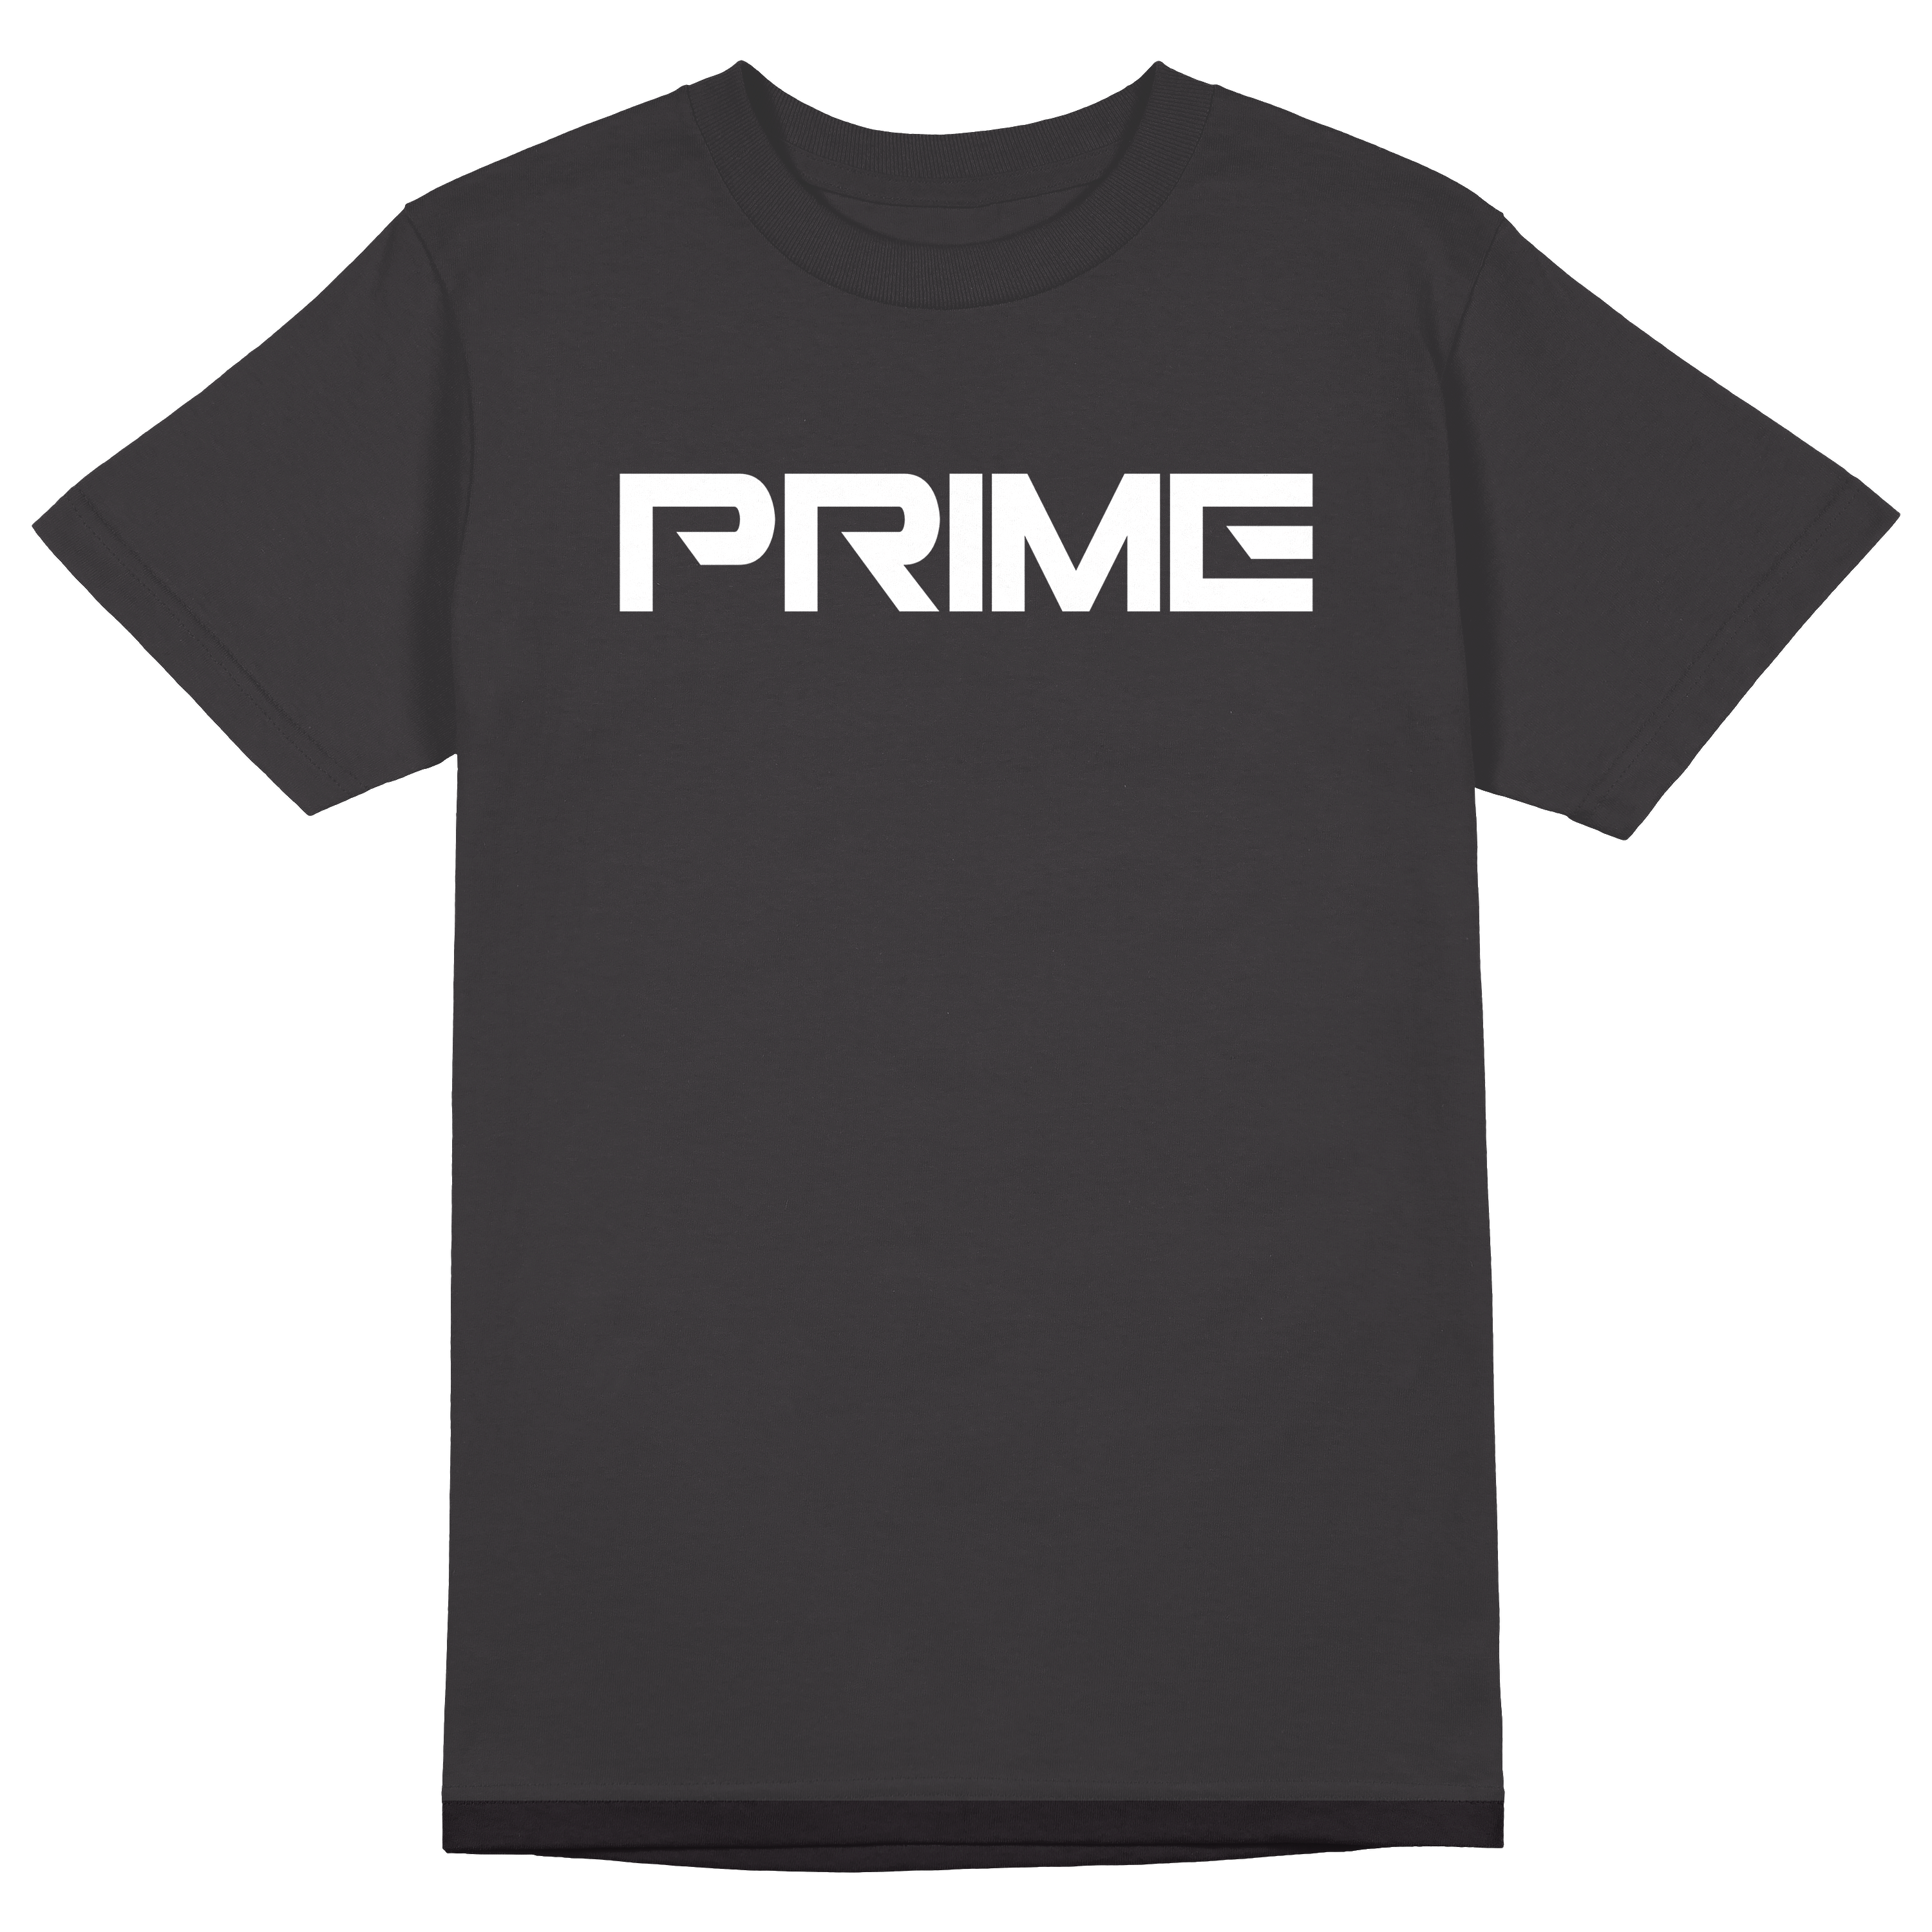 Prime Shirt